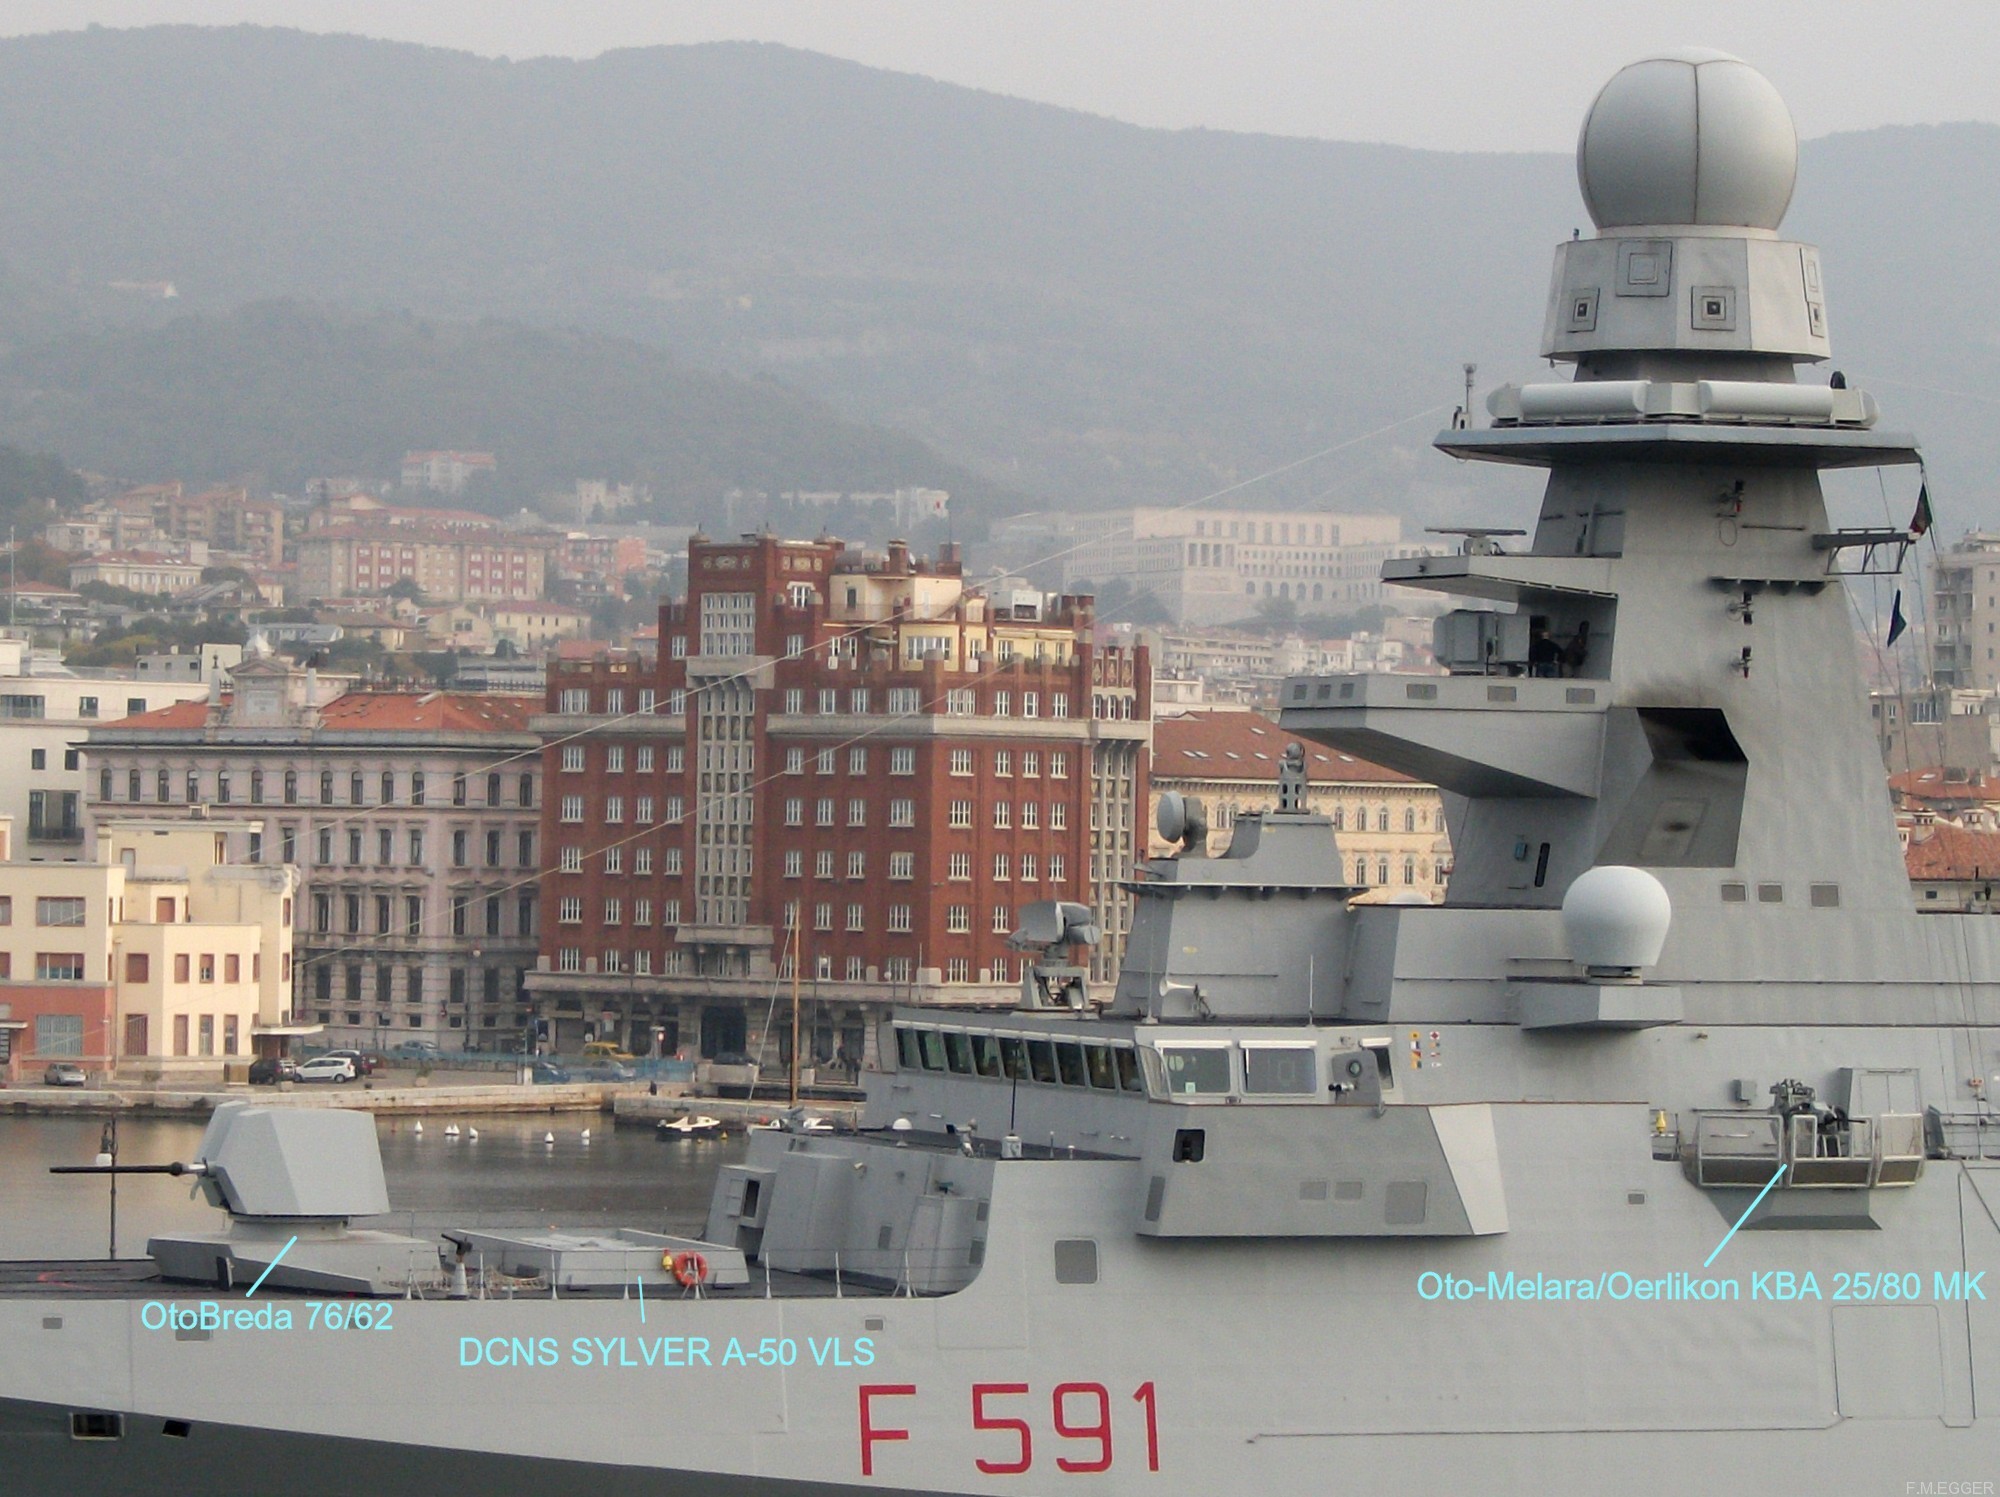 f-591 virginio fasan fremm bergamini class frigate italian navy marine militare 41 oto breda 76/62 gun dcns sylver a-50 vls